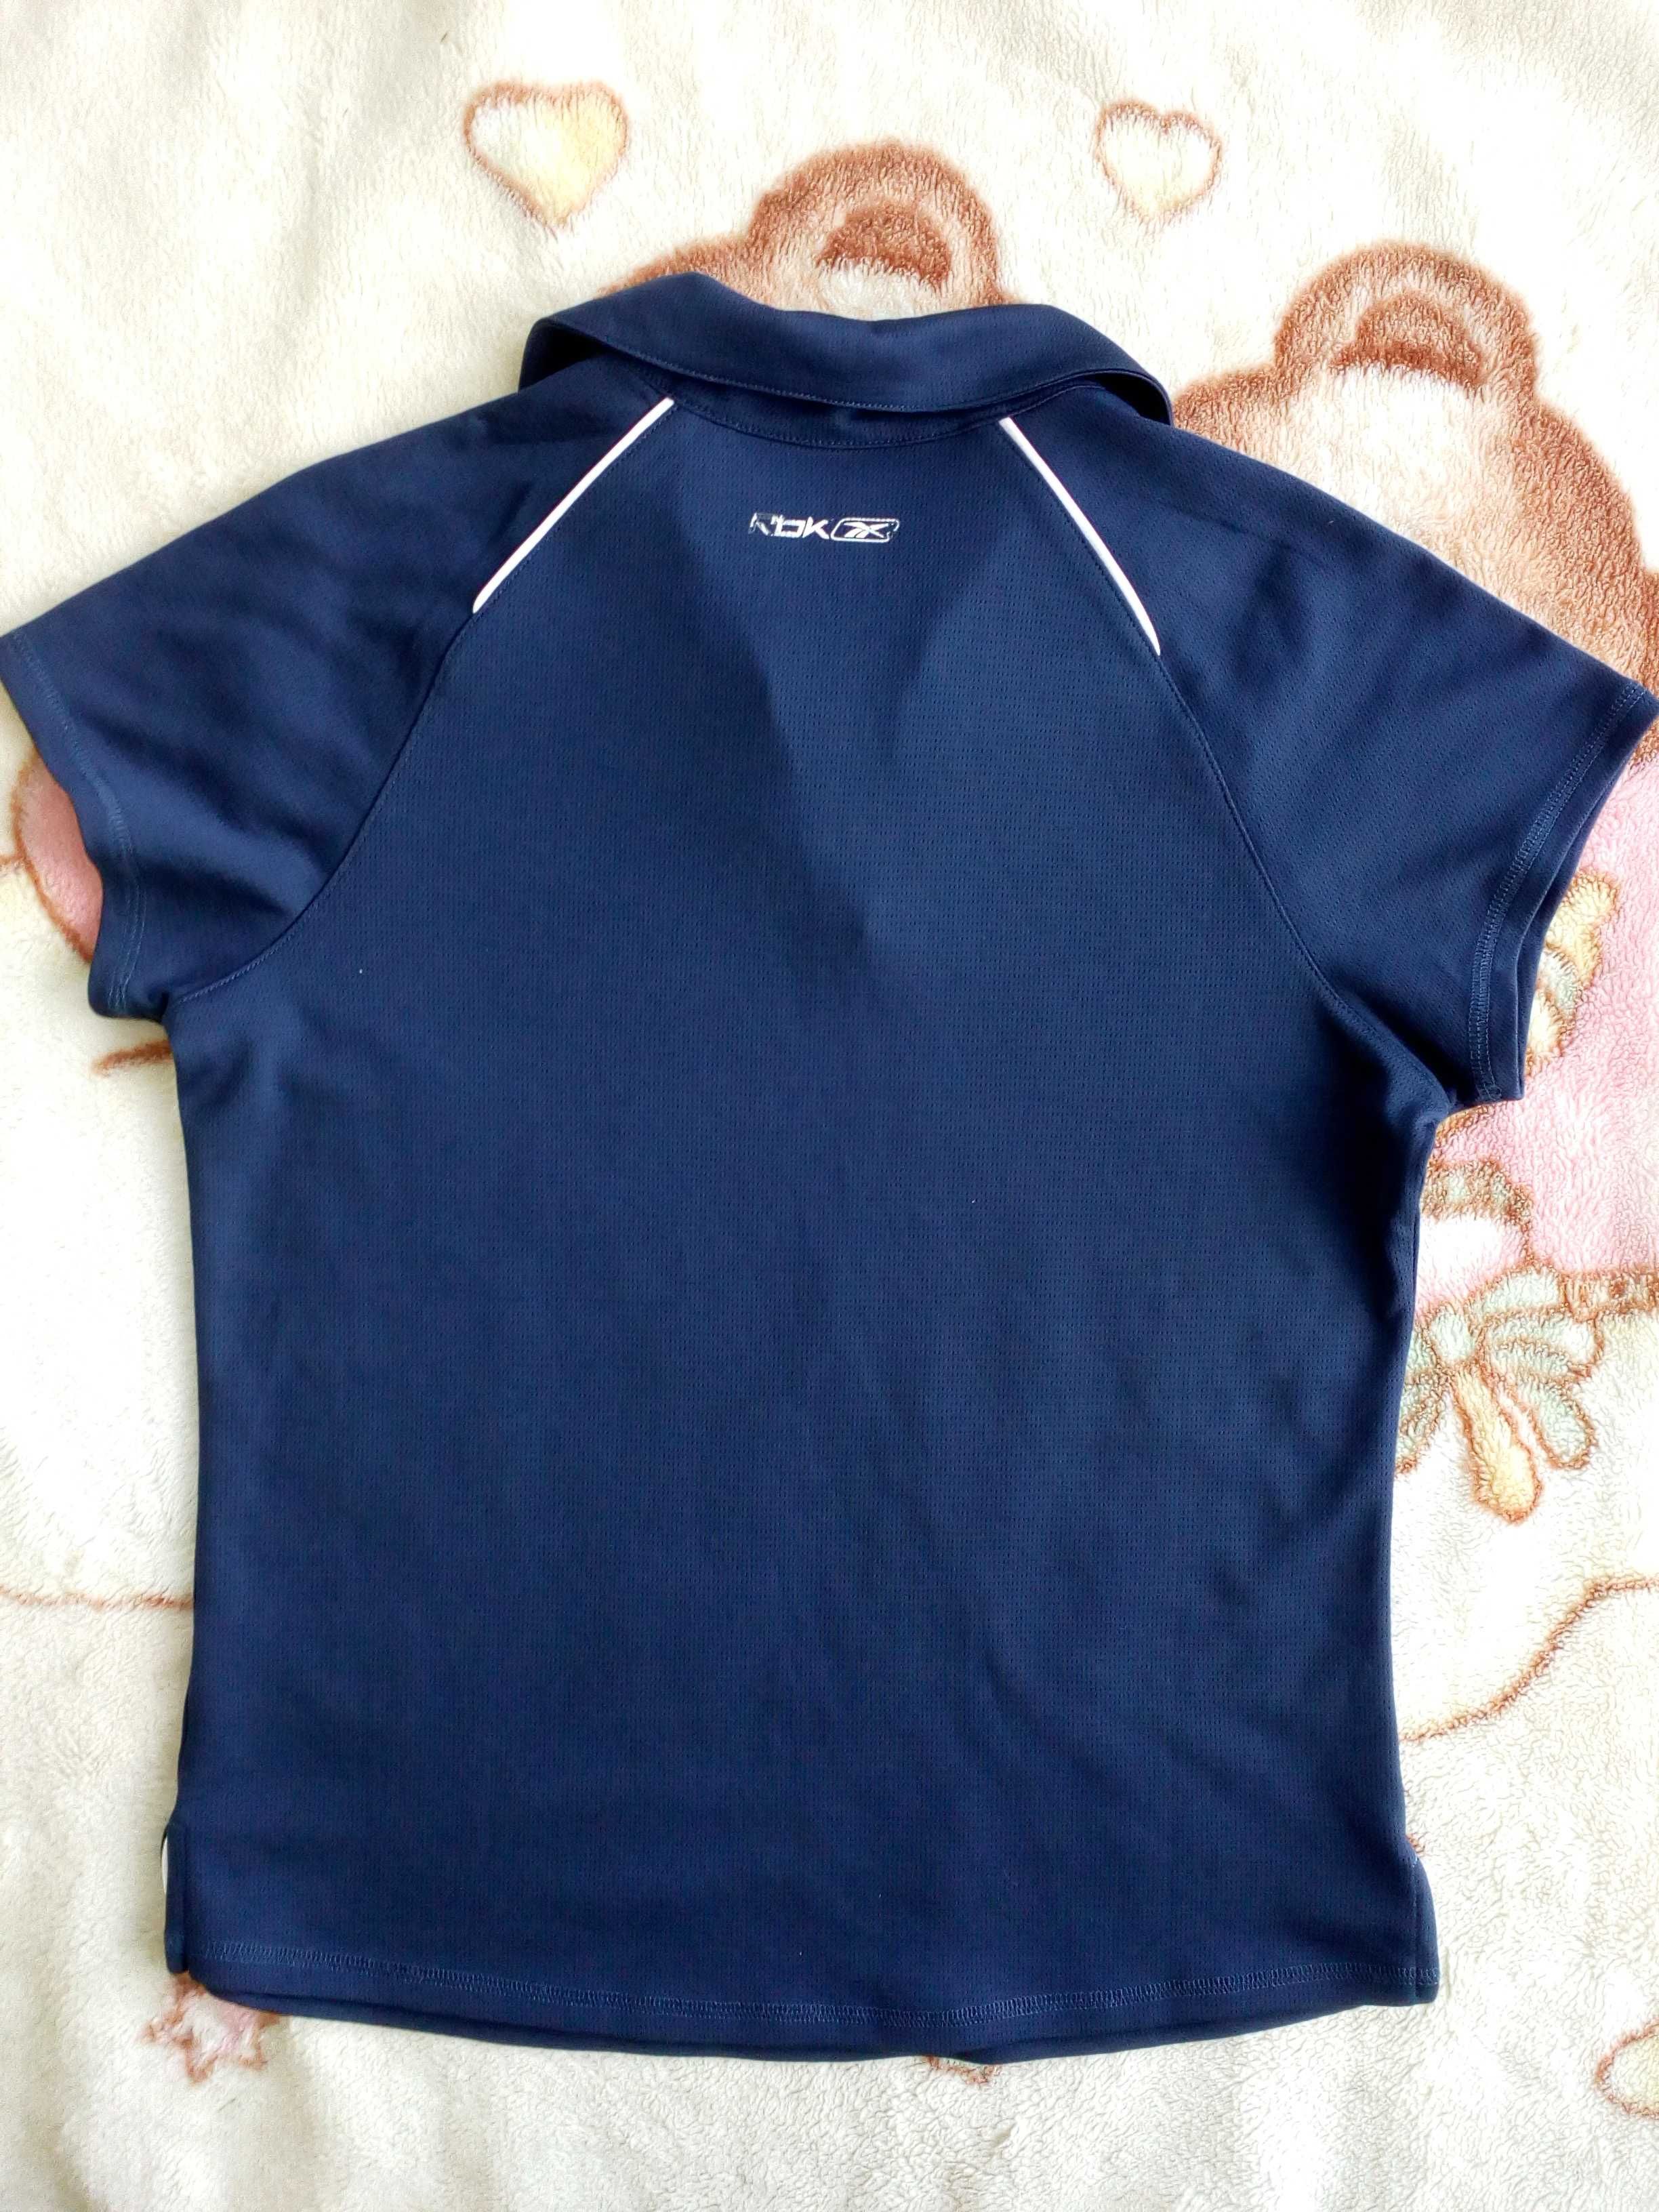 Granatowa bluzka sportowa Reebok koszulka polo ok. 36 - 38